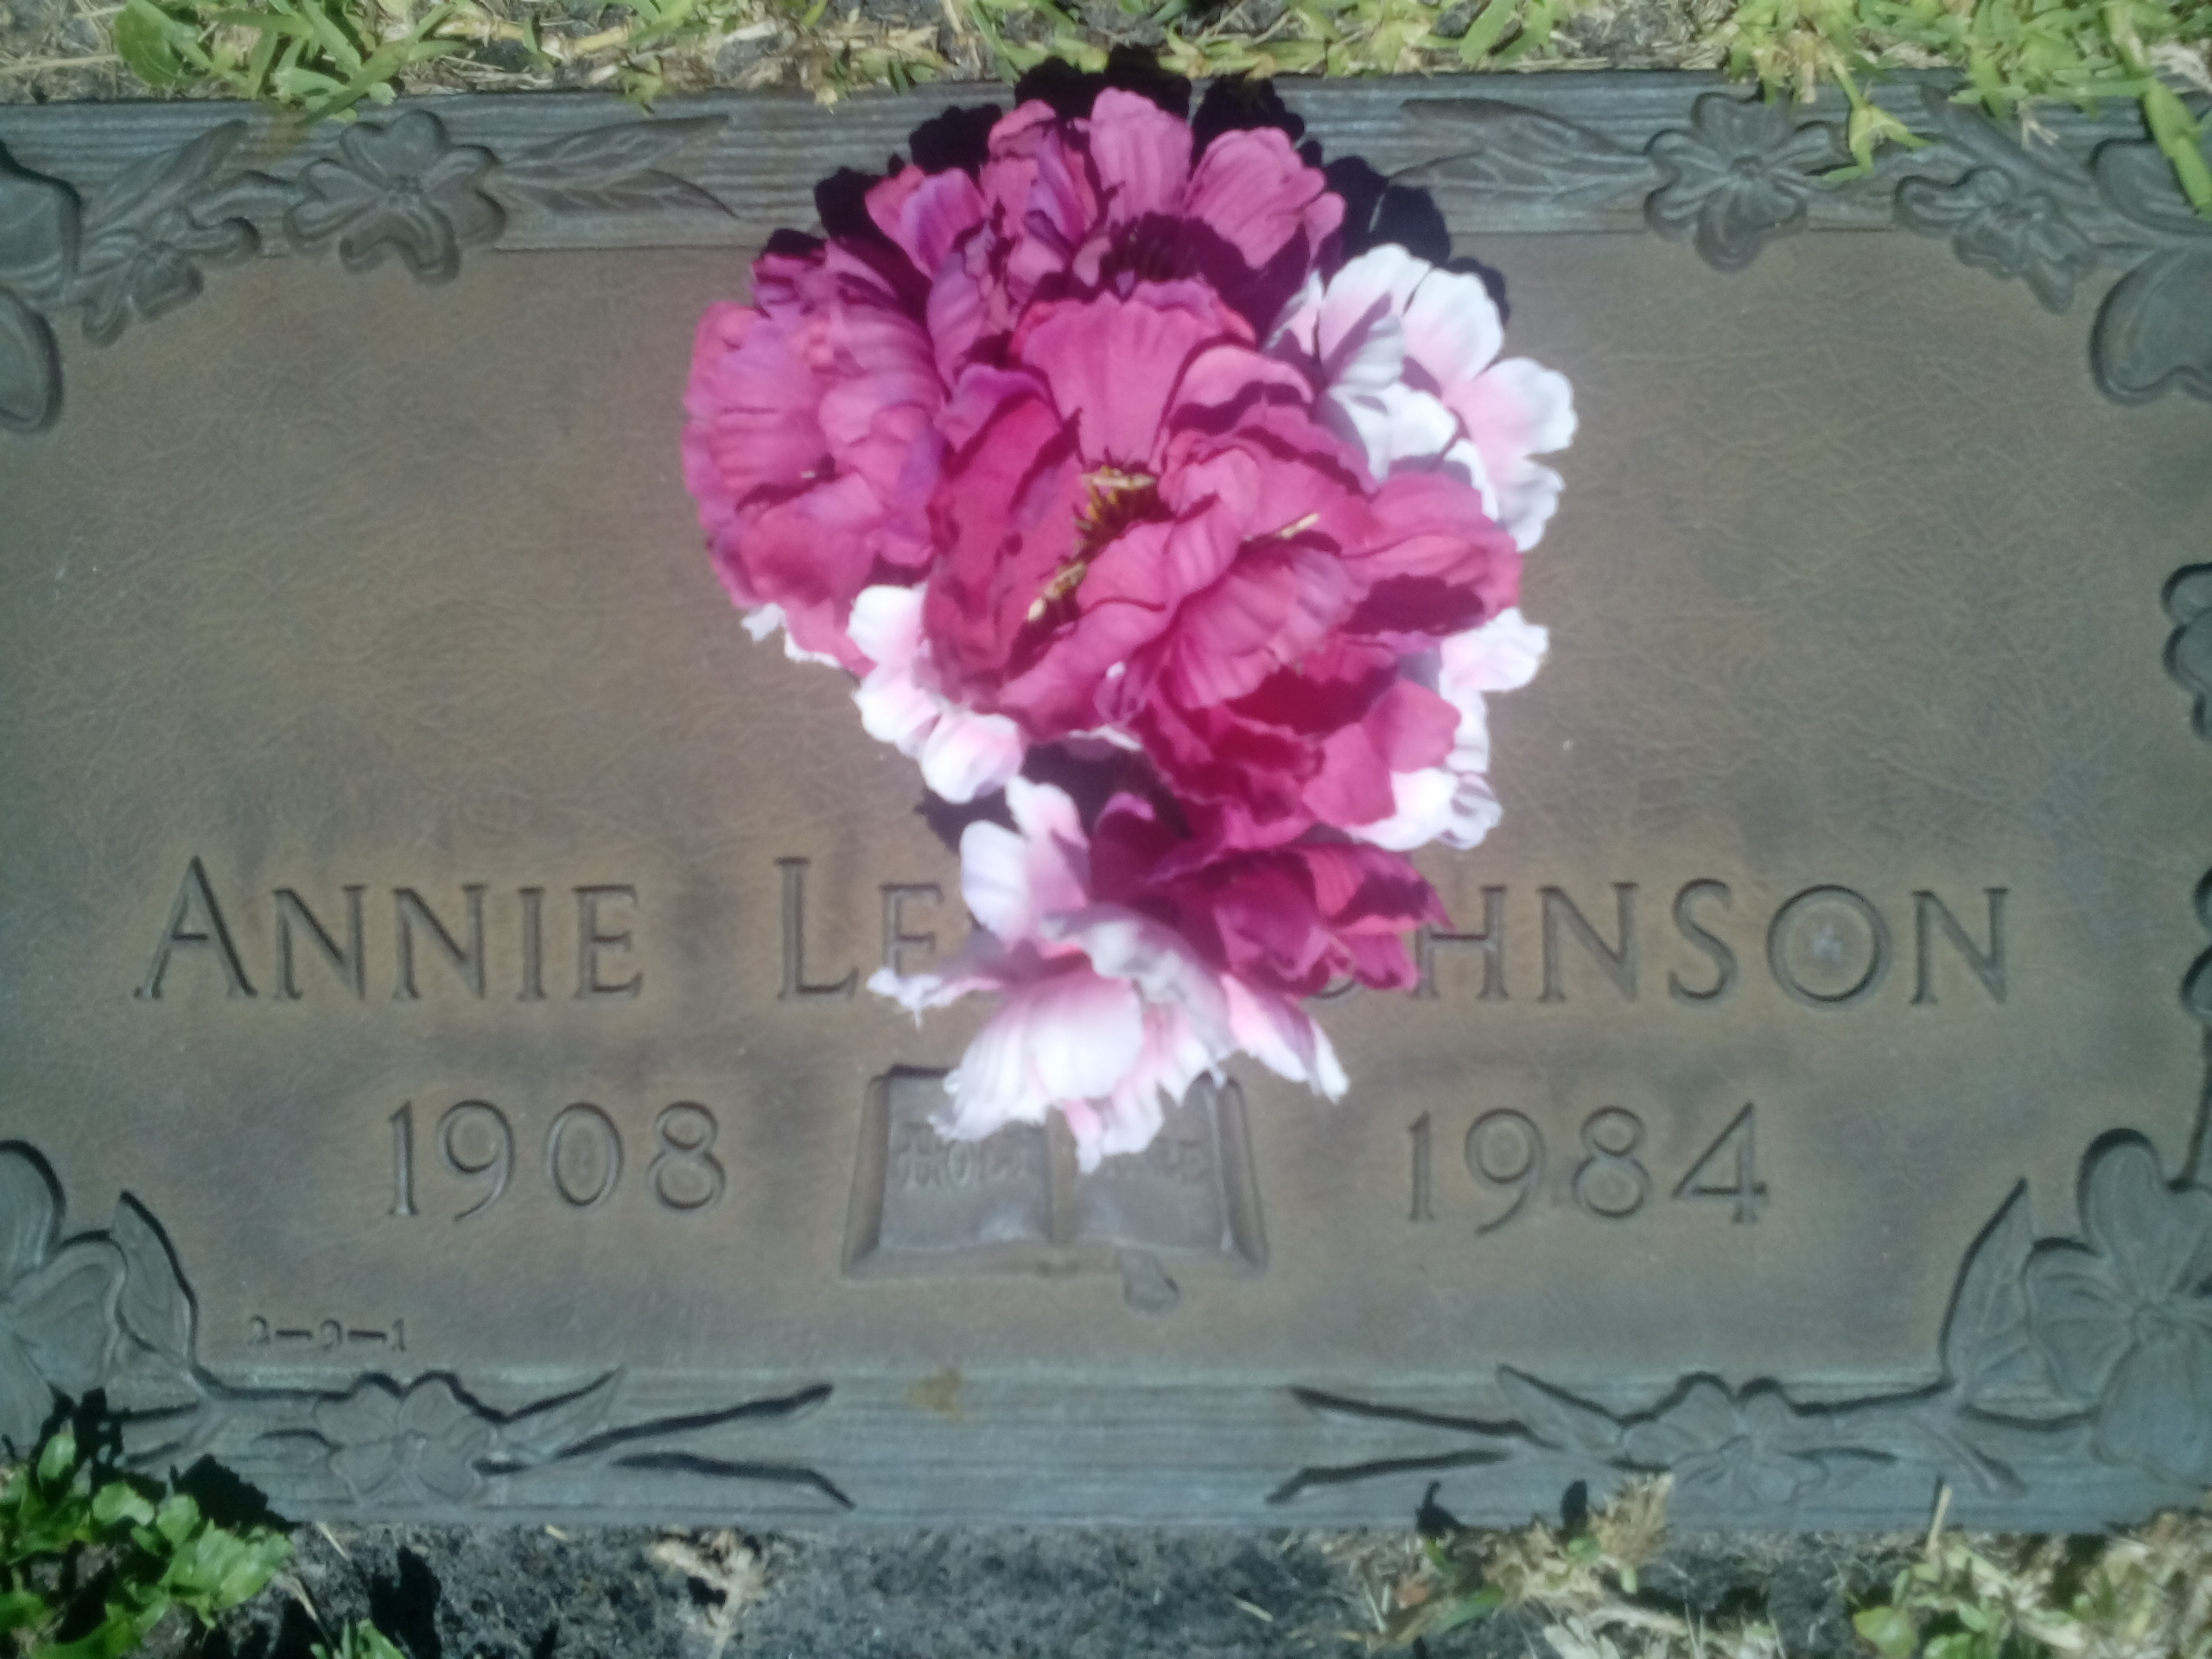 Annie Lee Johnson